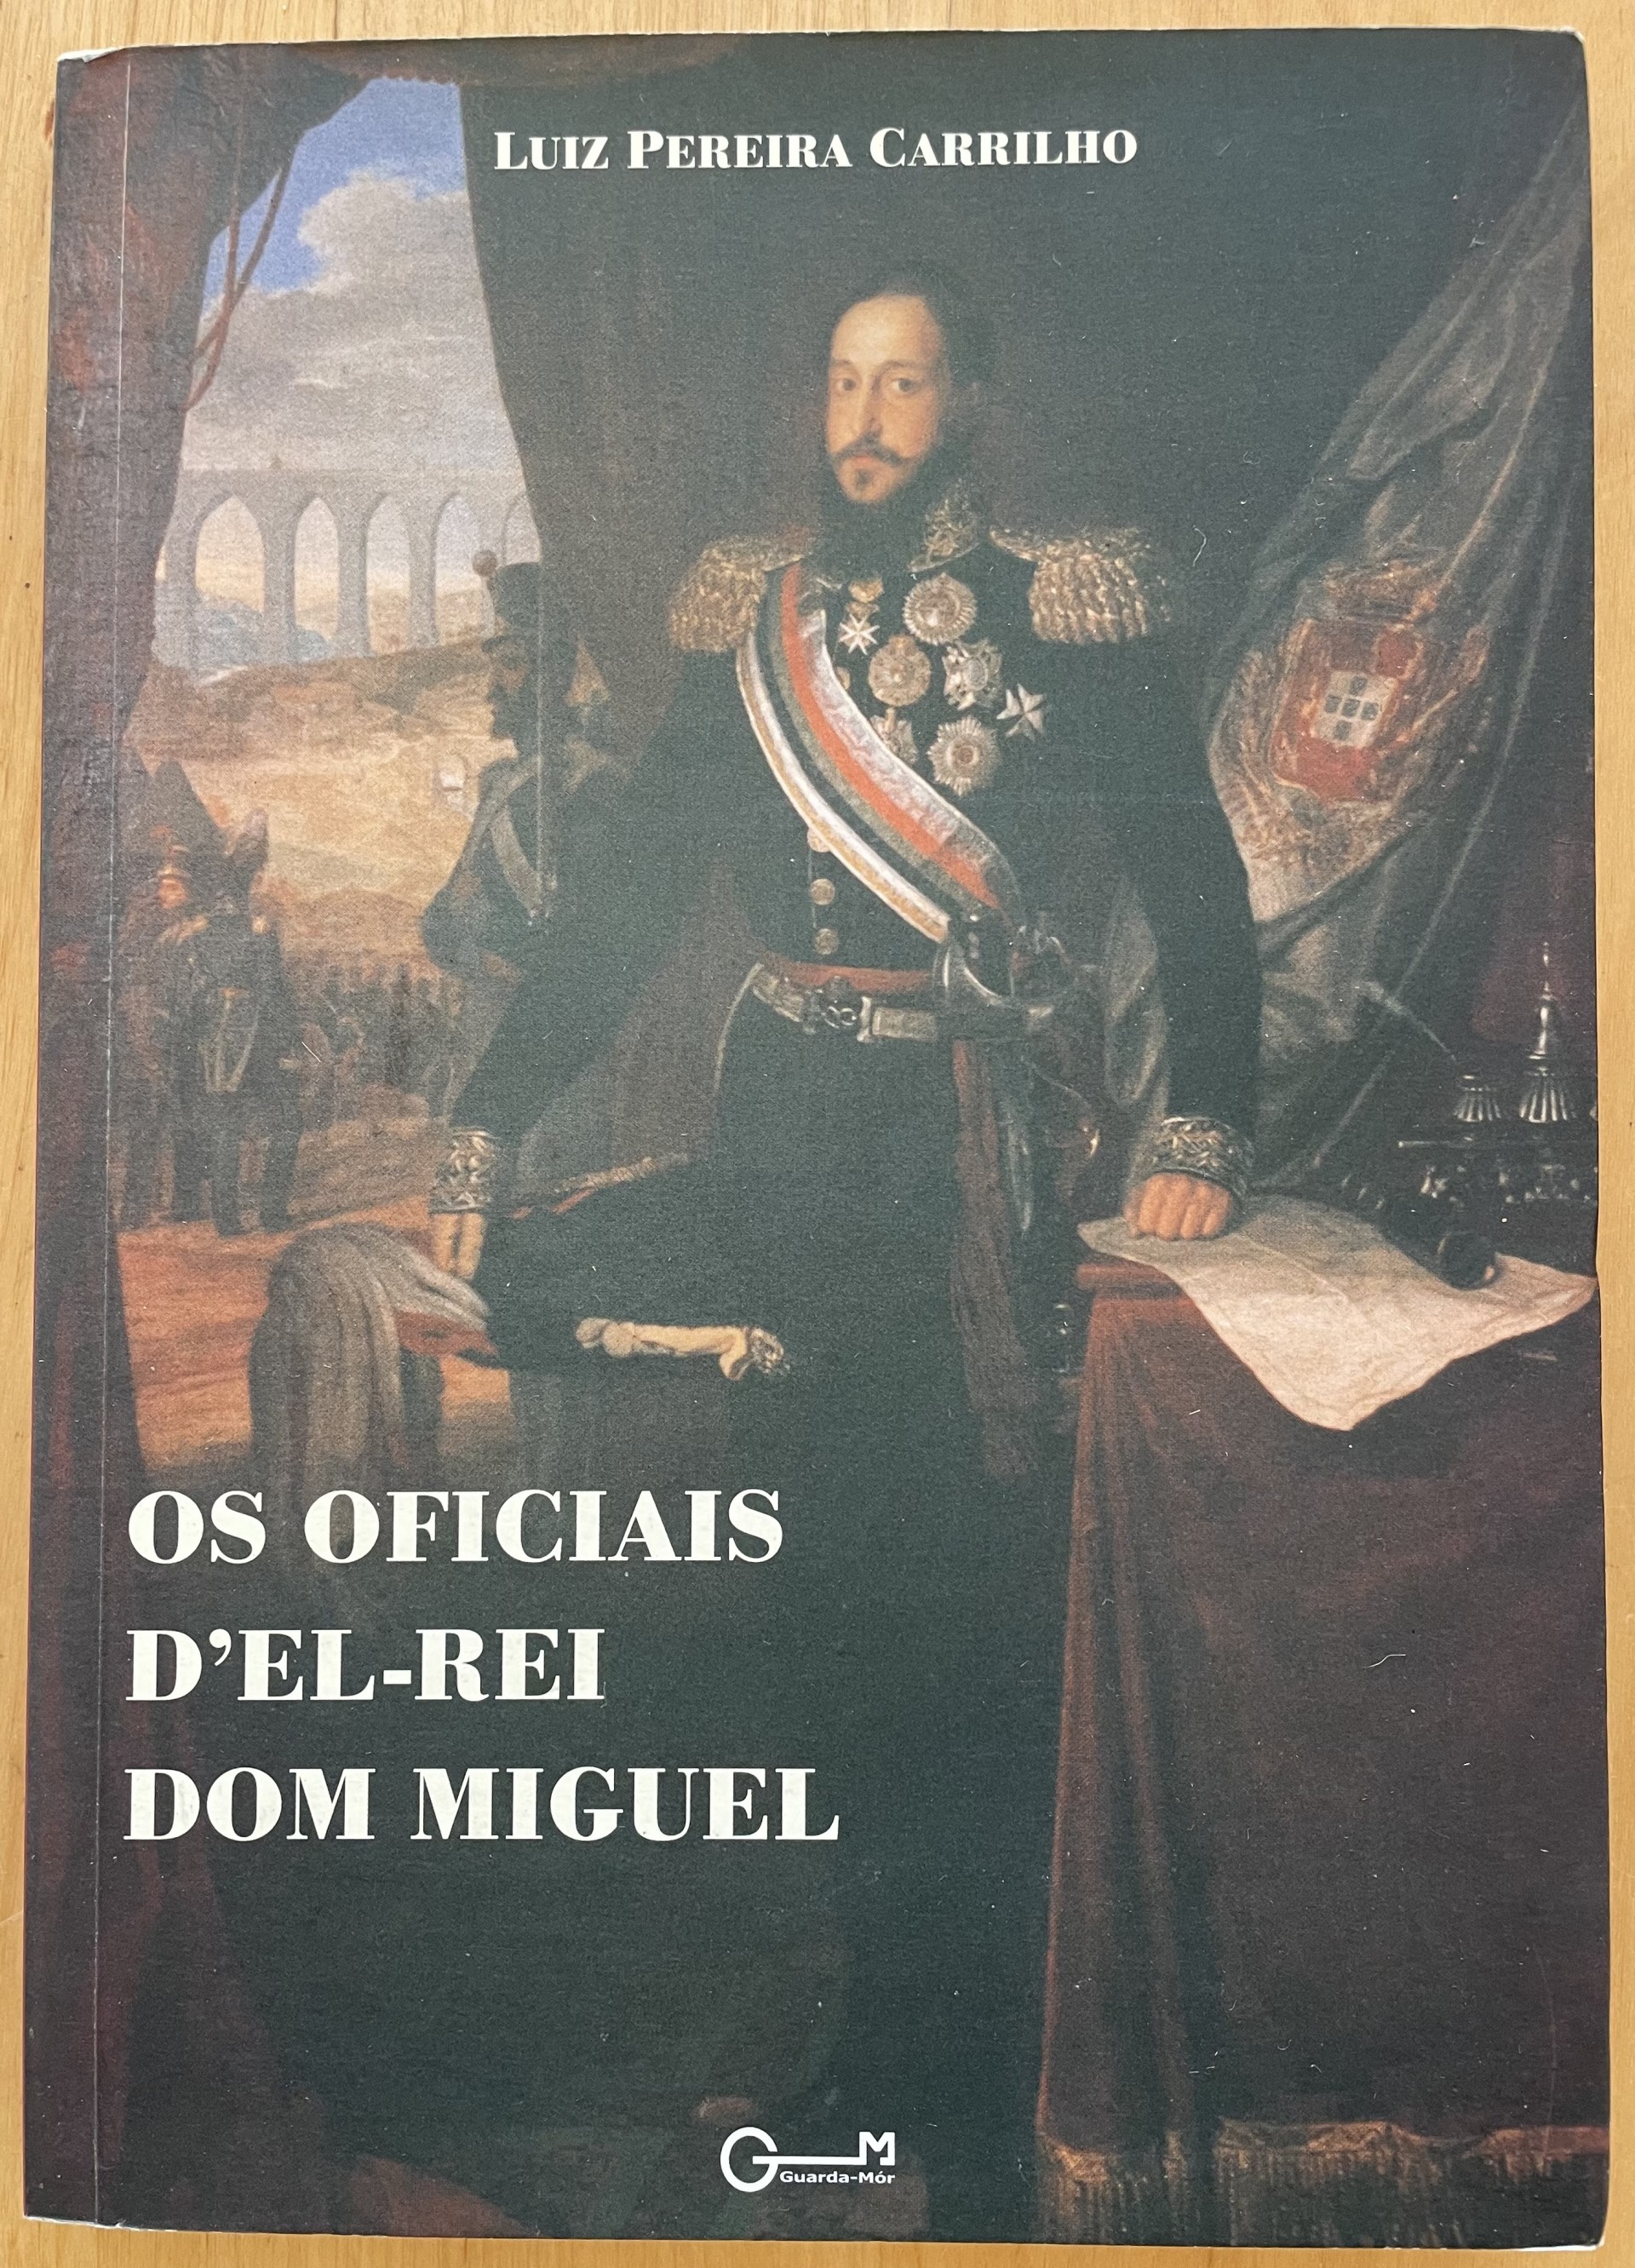 Os Oficiais d’El-Rei Dom Miguel